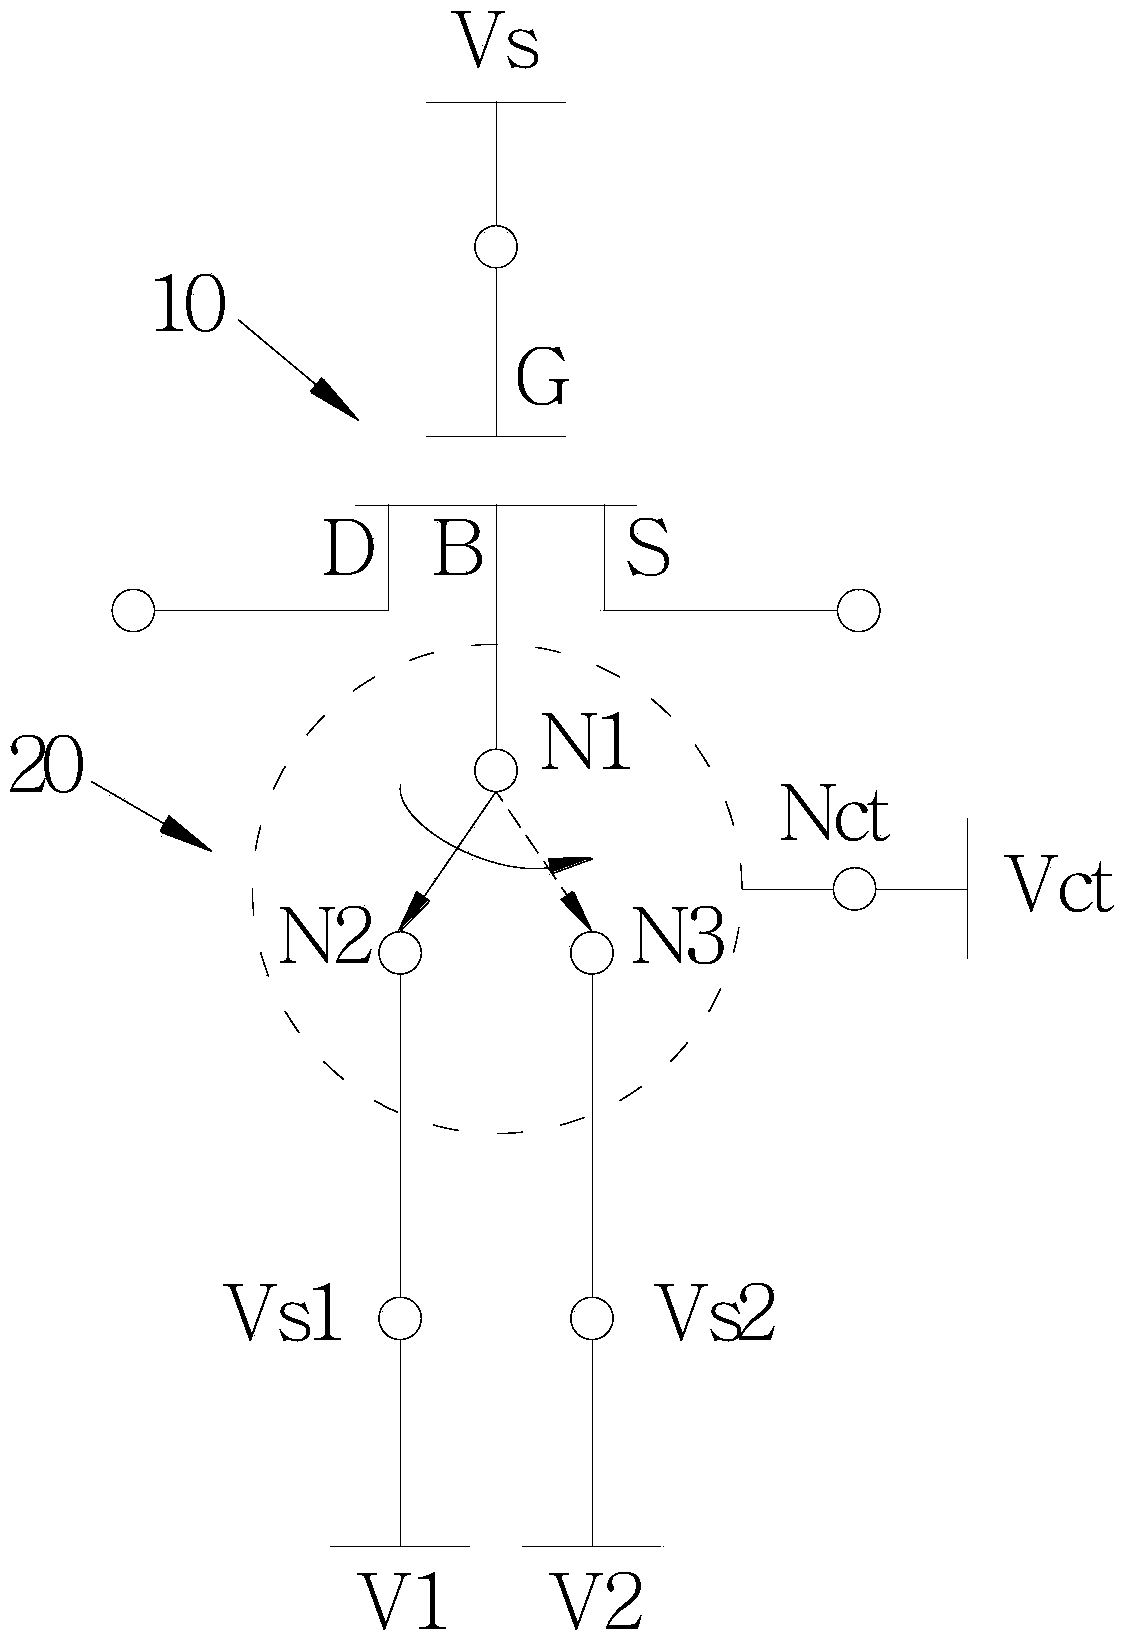 Analog switch circuit